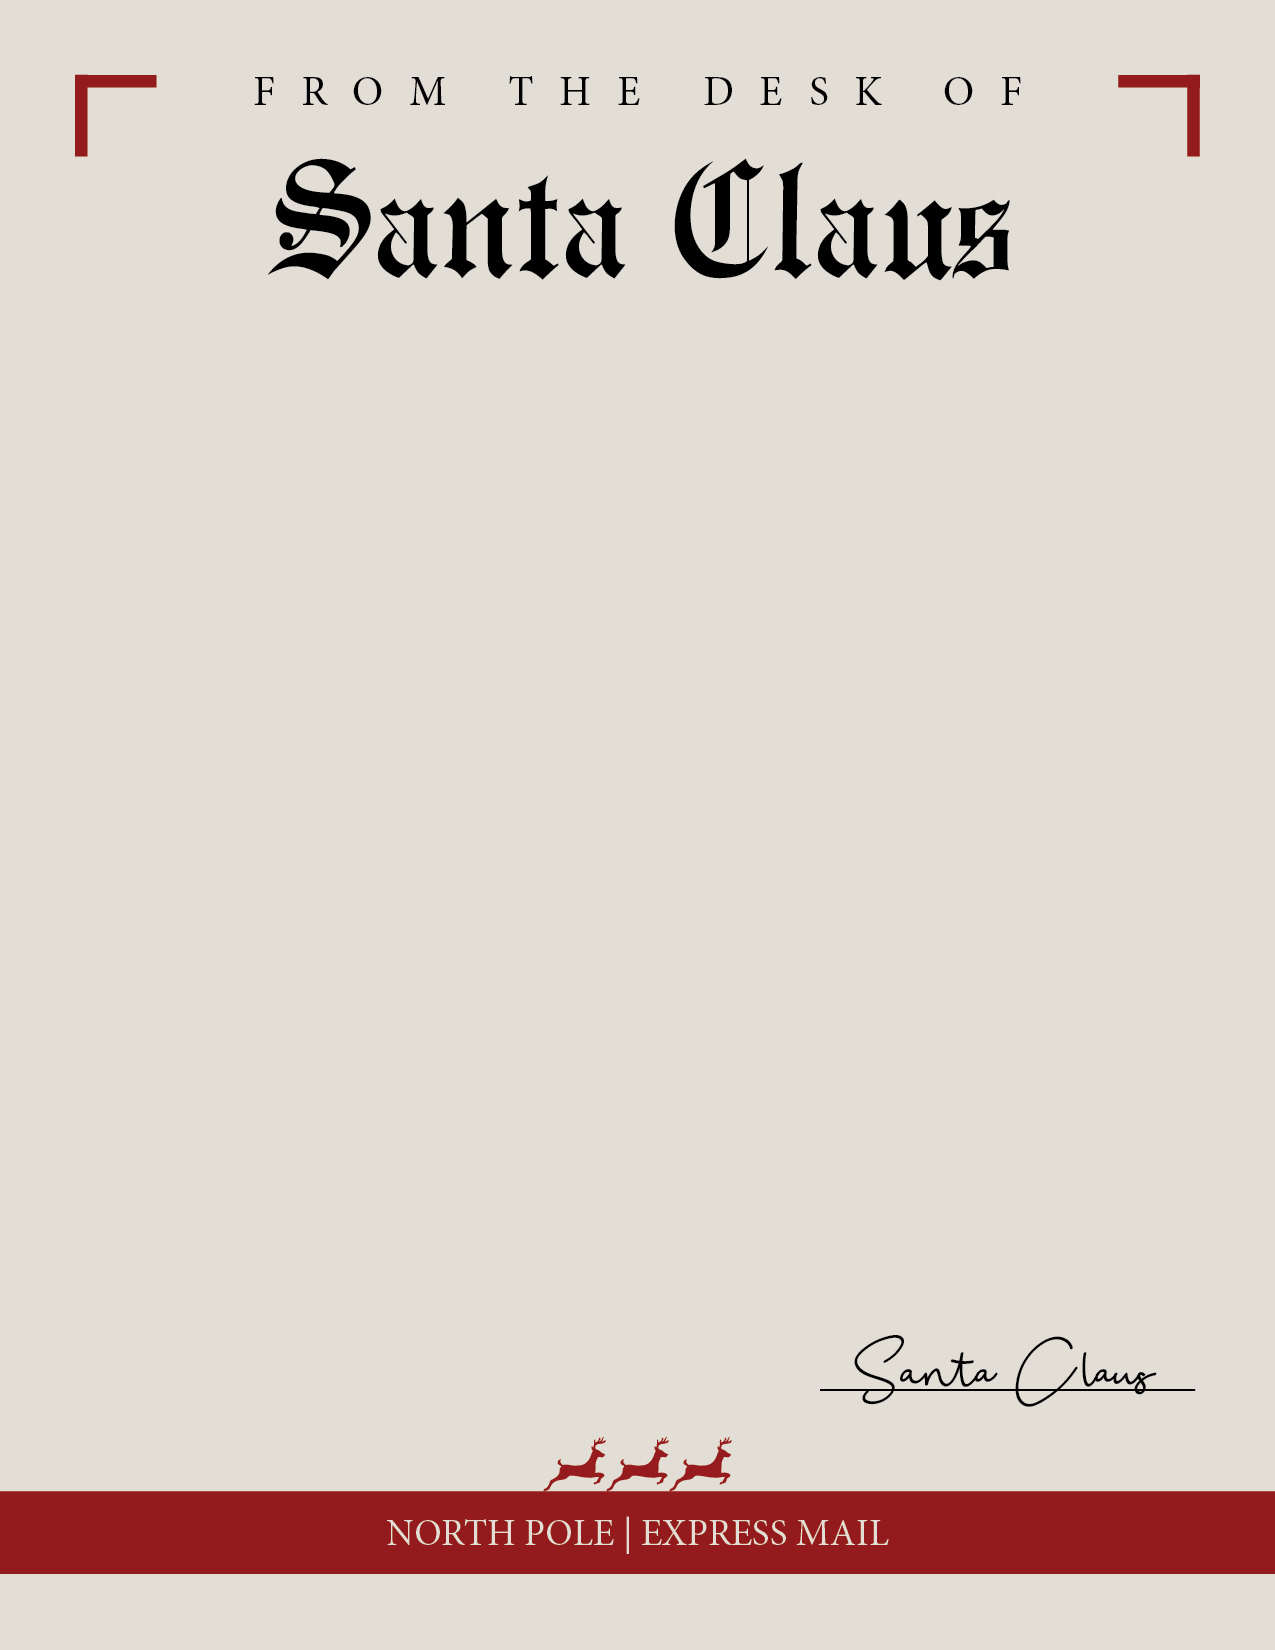 printable-santa-letterhead-templates-12-free-printables-printabulls